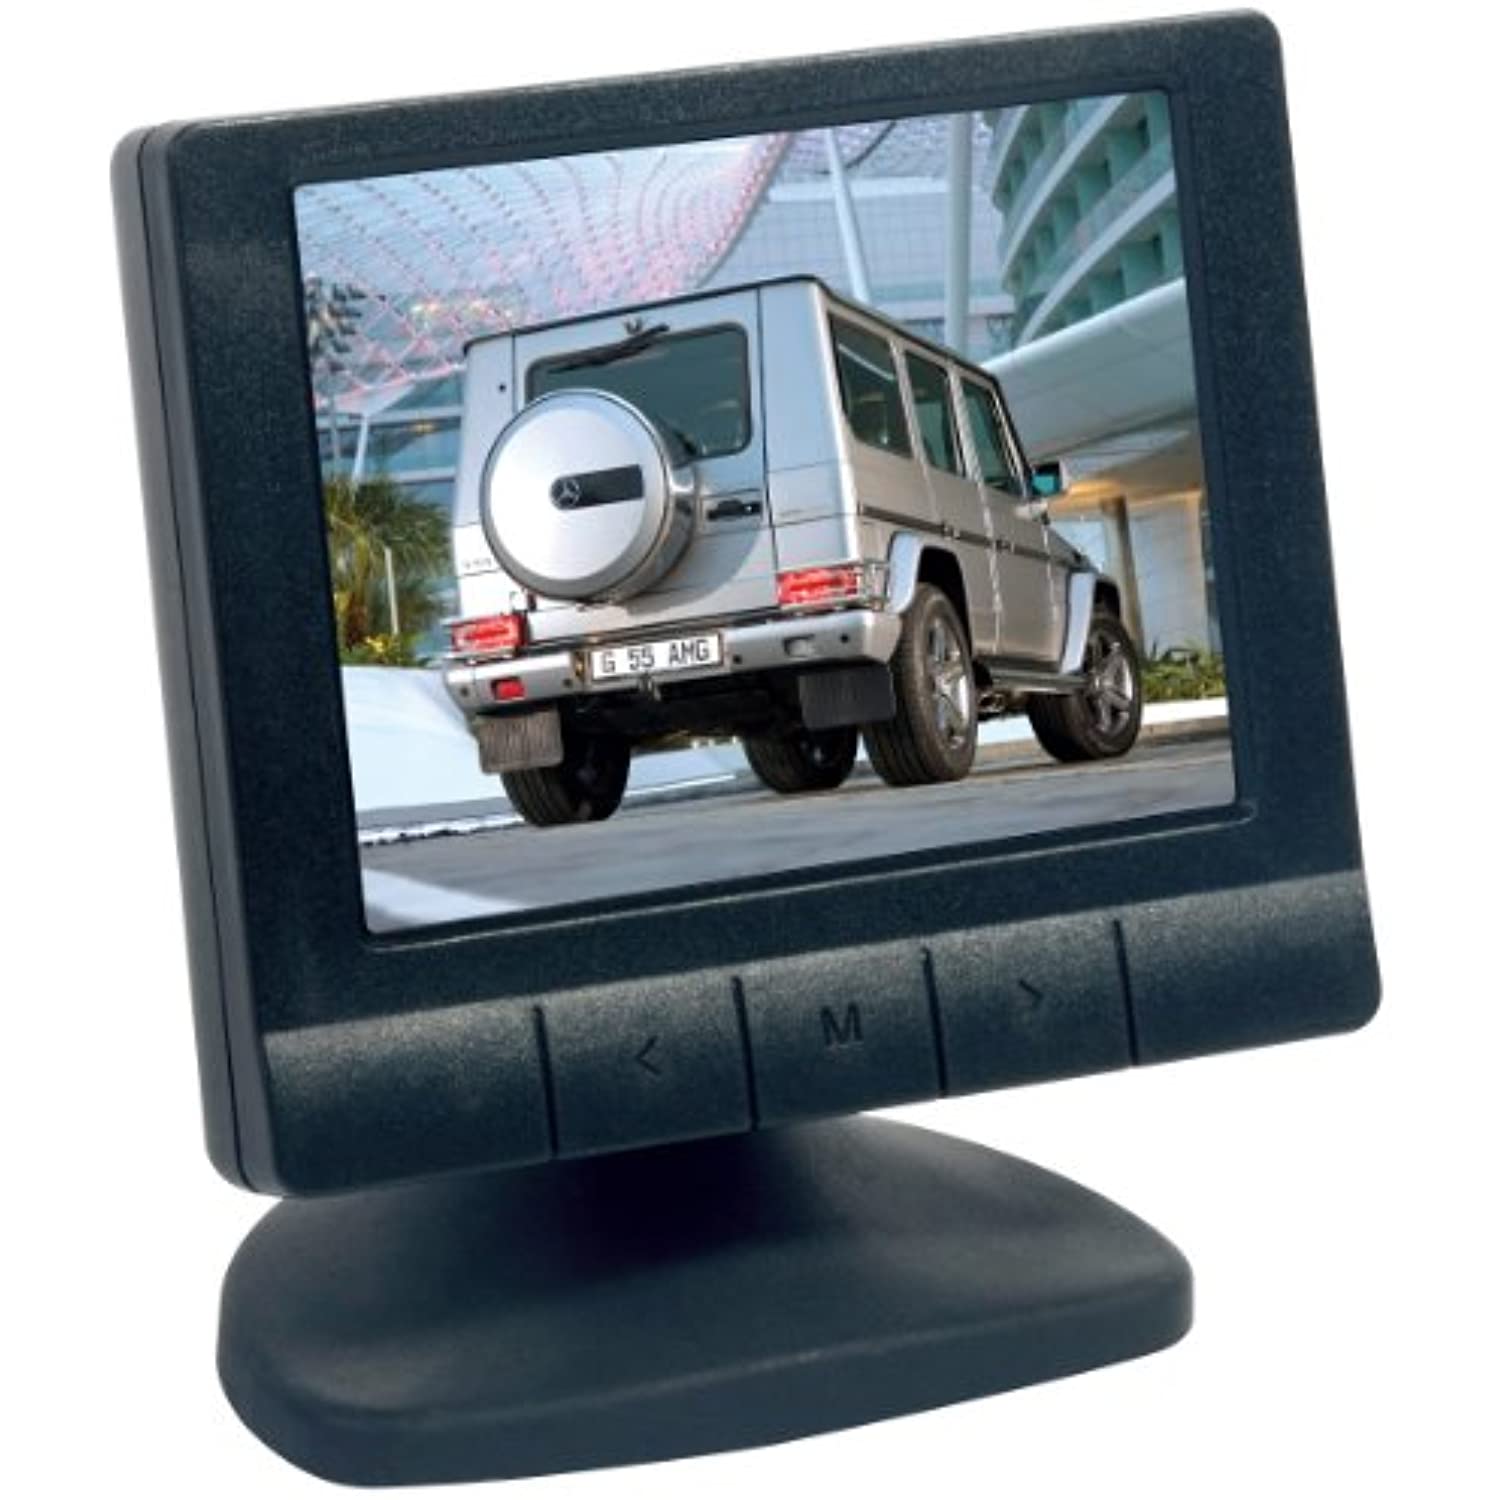 Metra Third Eye 3.5-Inch Color LCD Video Screen (Black)